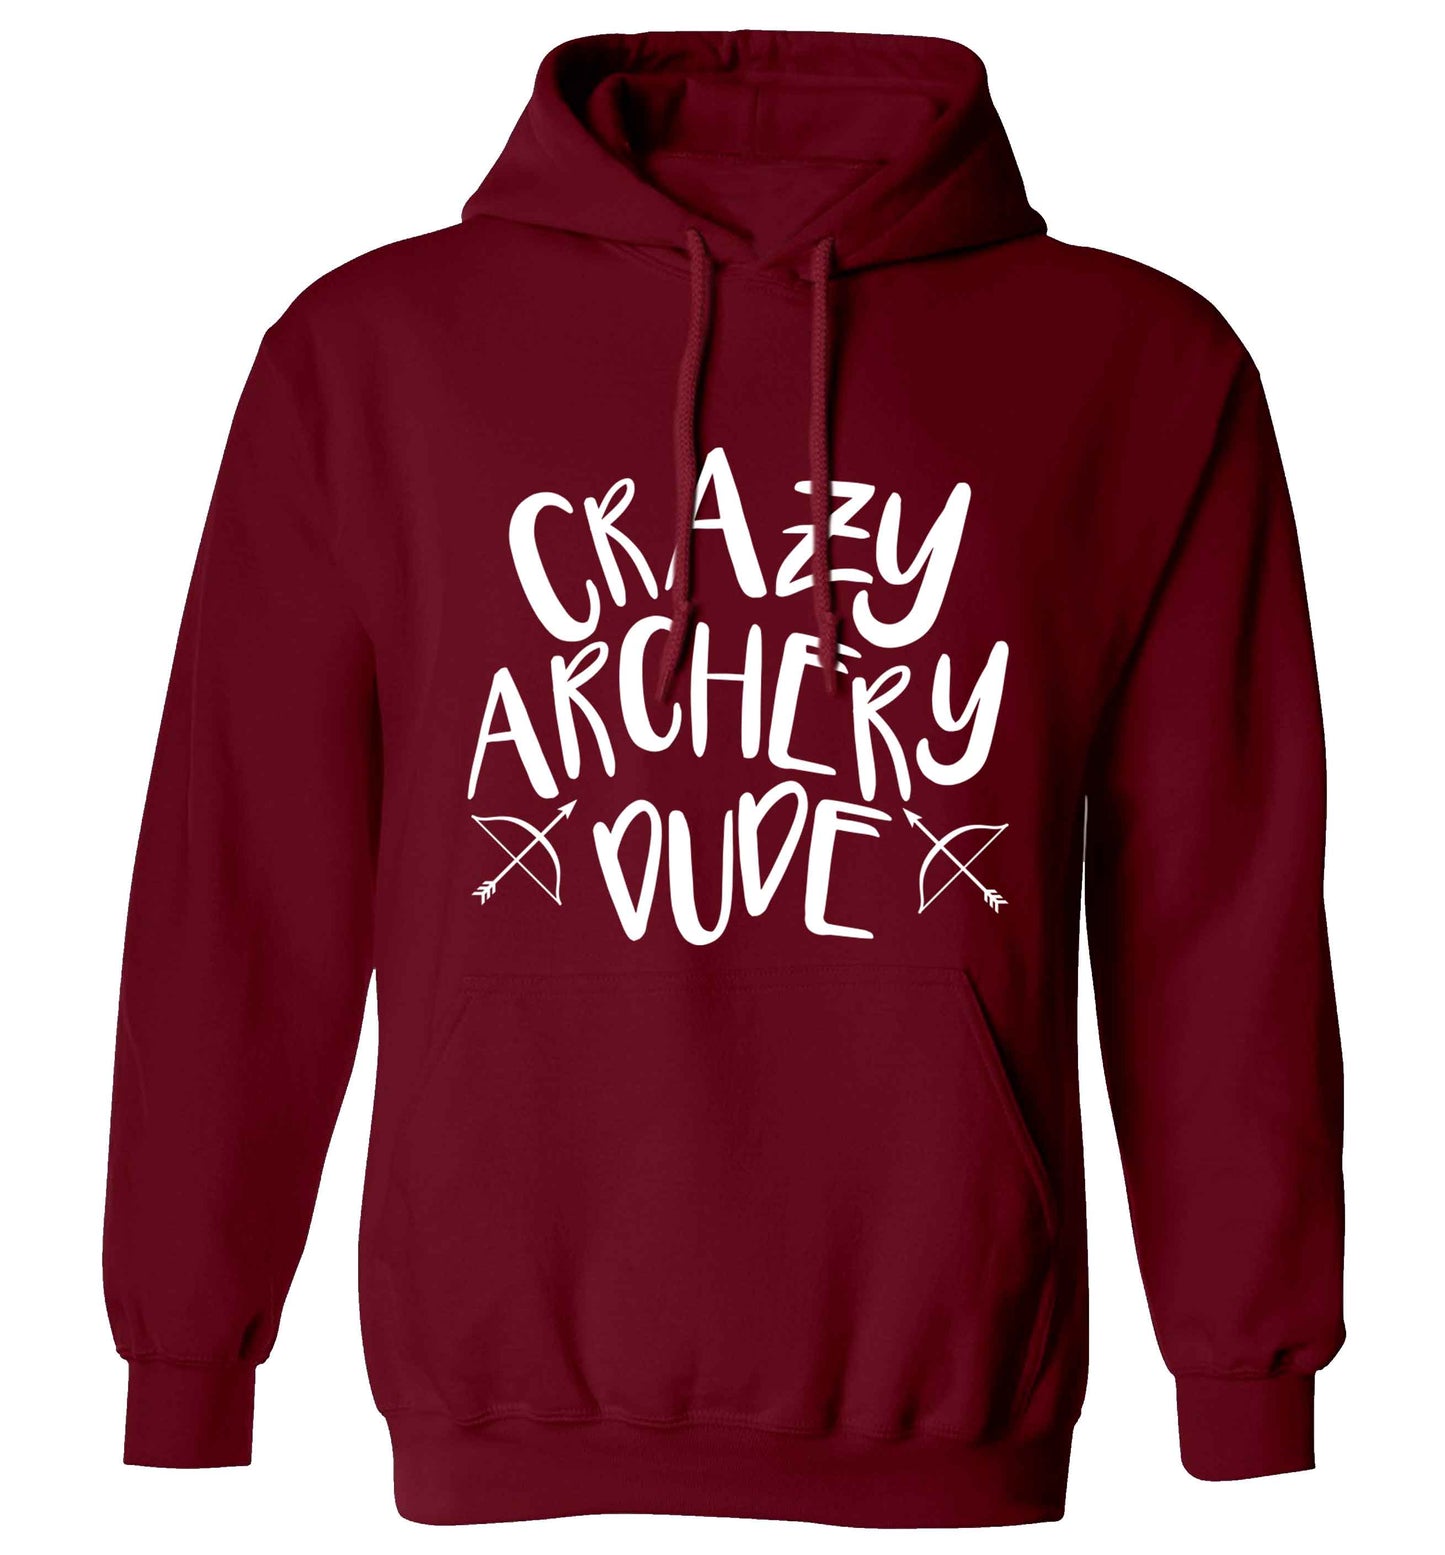 Crazy archery dude adults unisex maroon hoodie 2XL